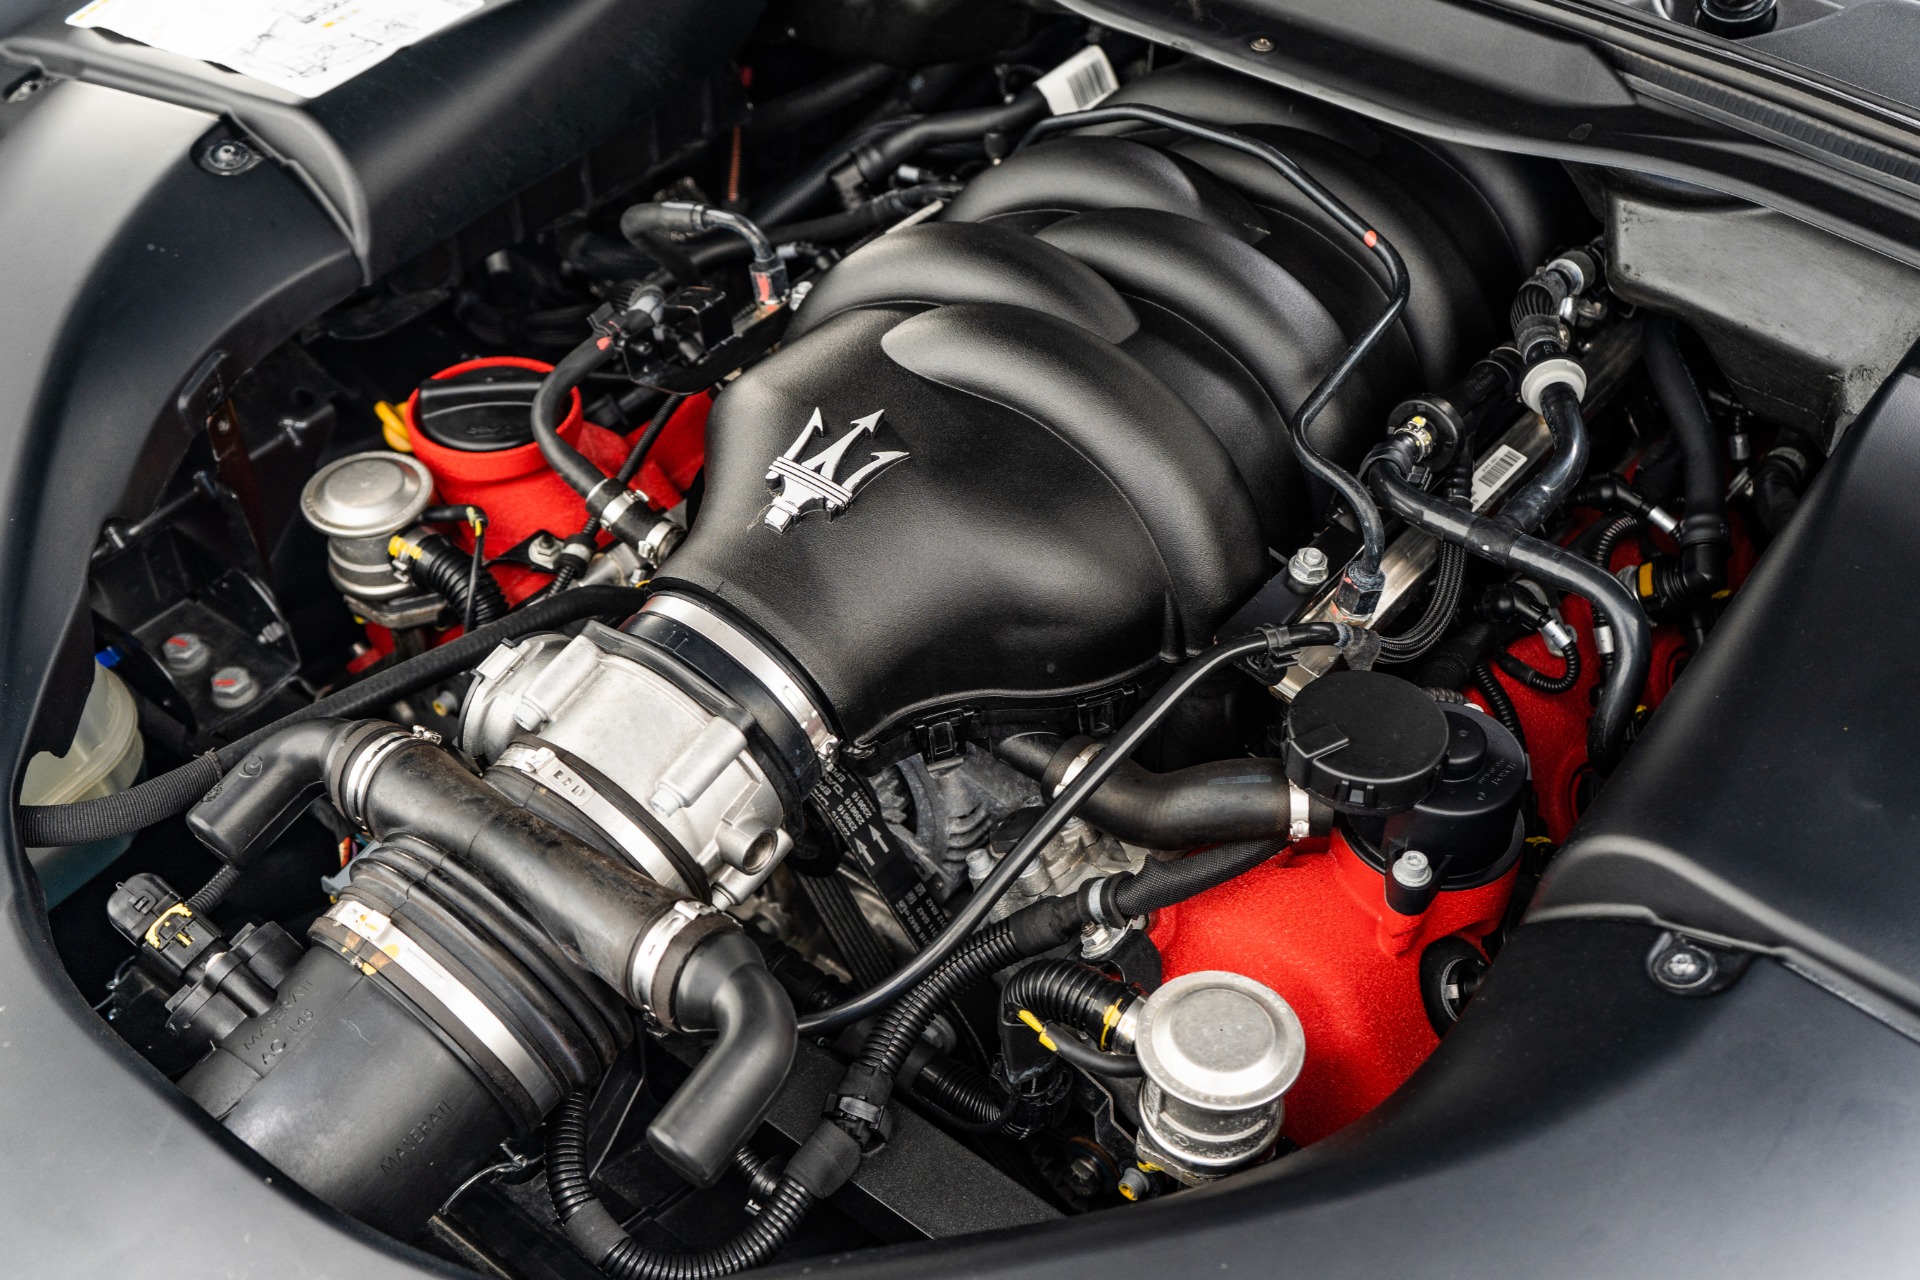 Limited-edition Maserati GranTurismo farewells iconic combustion engine